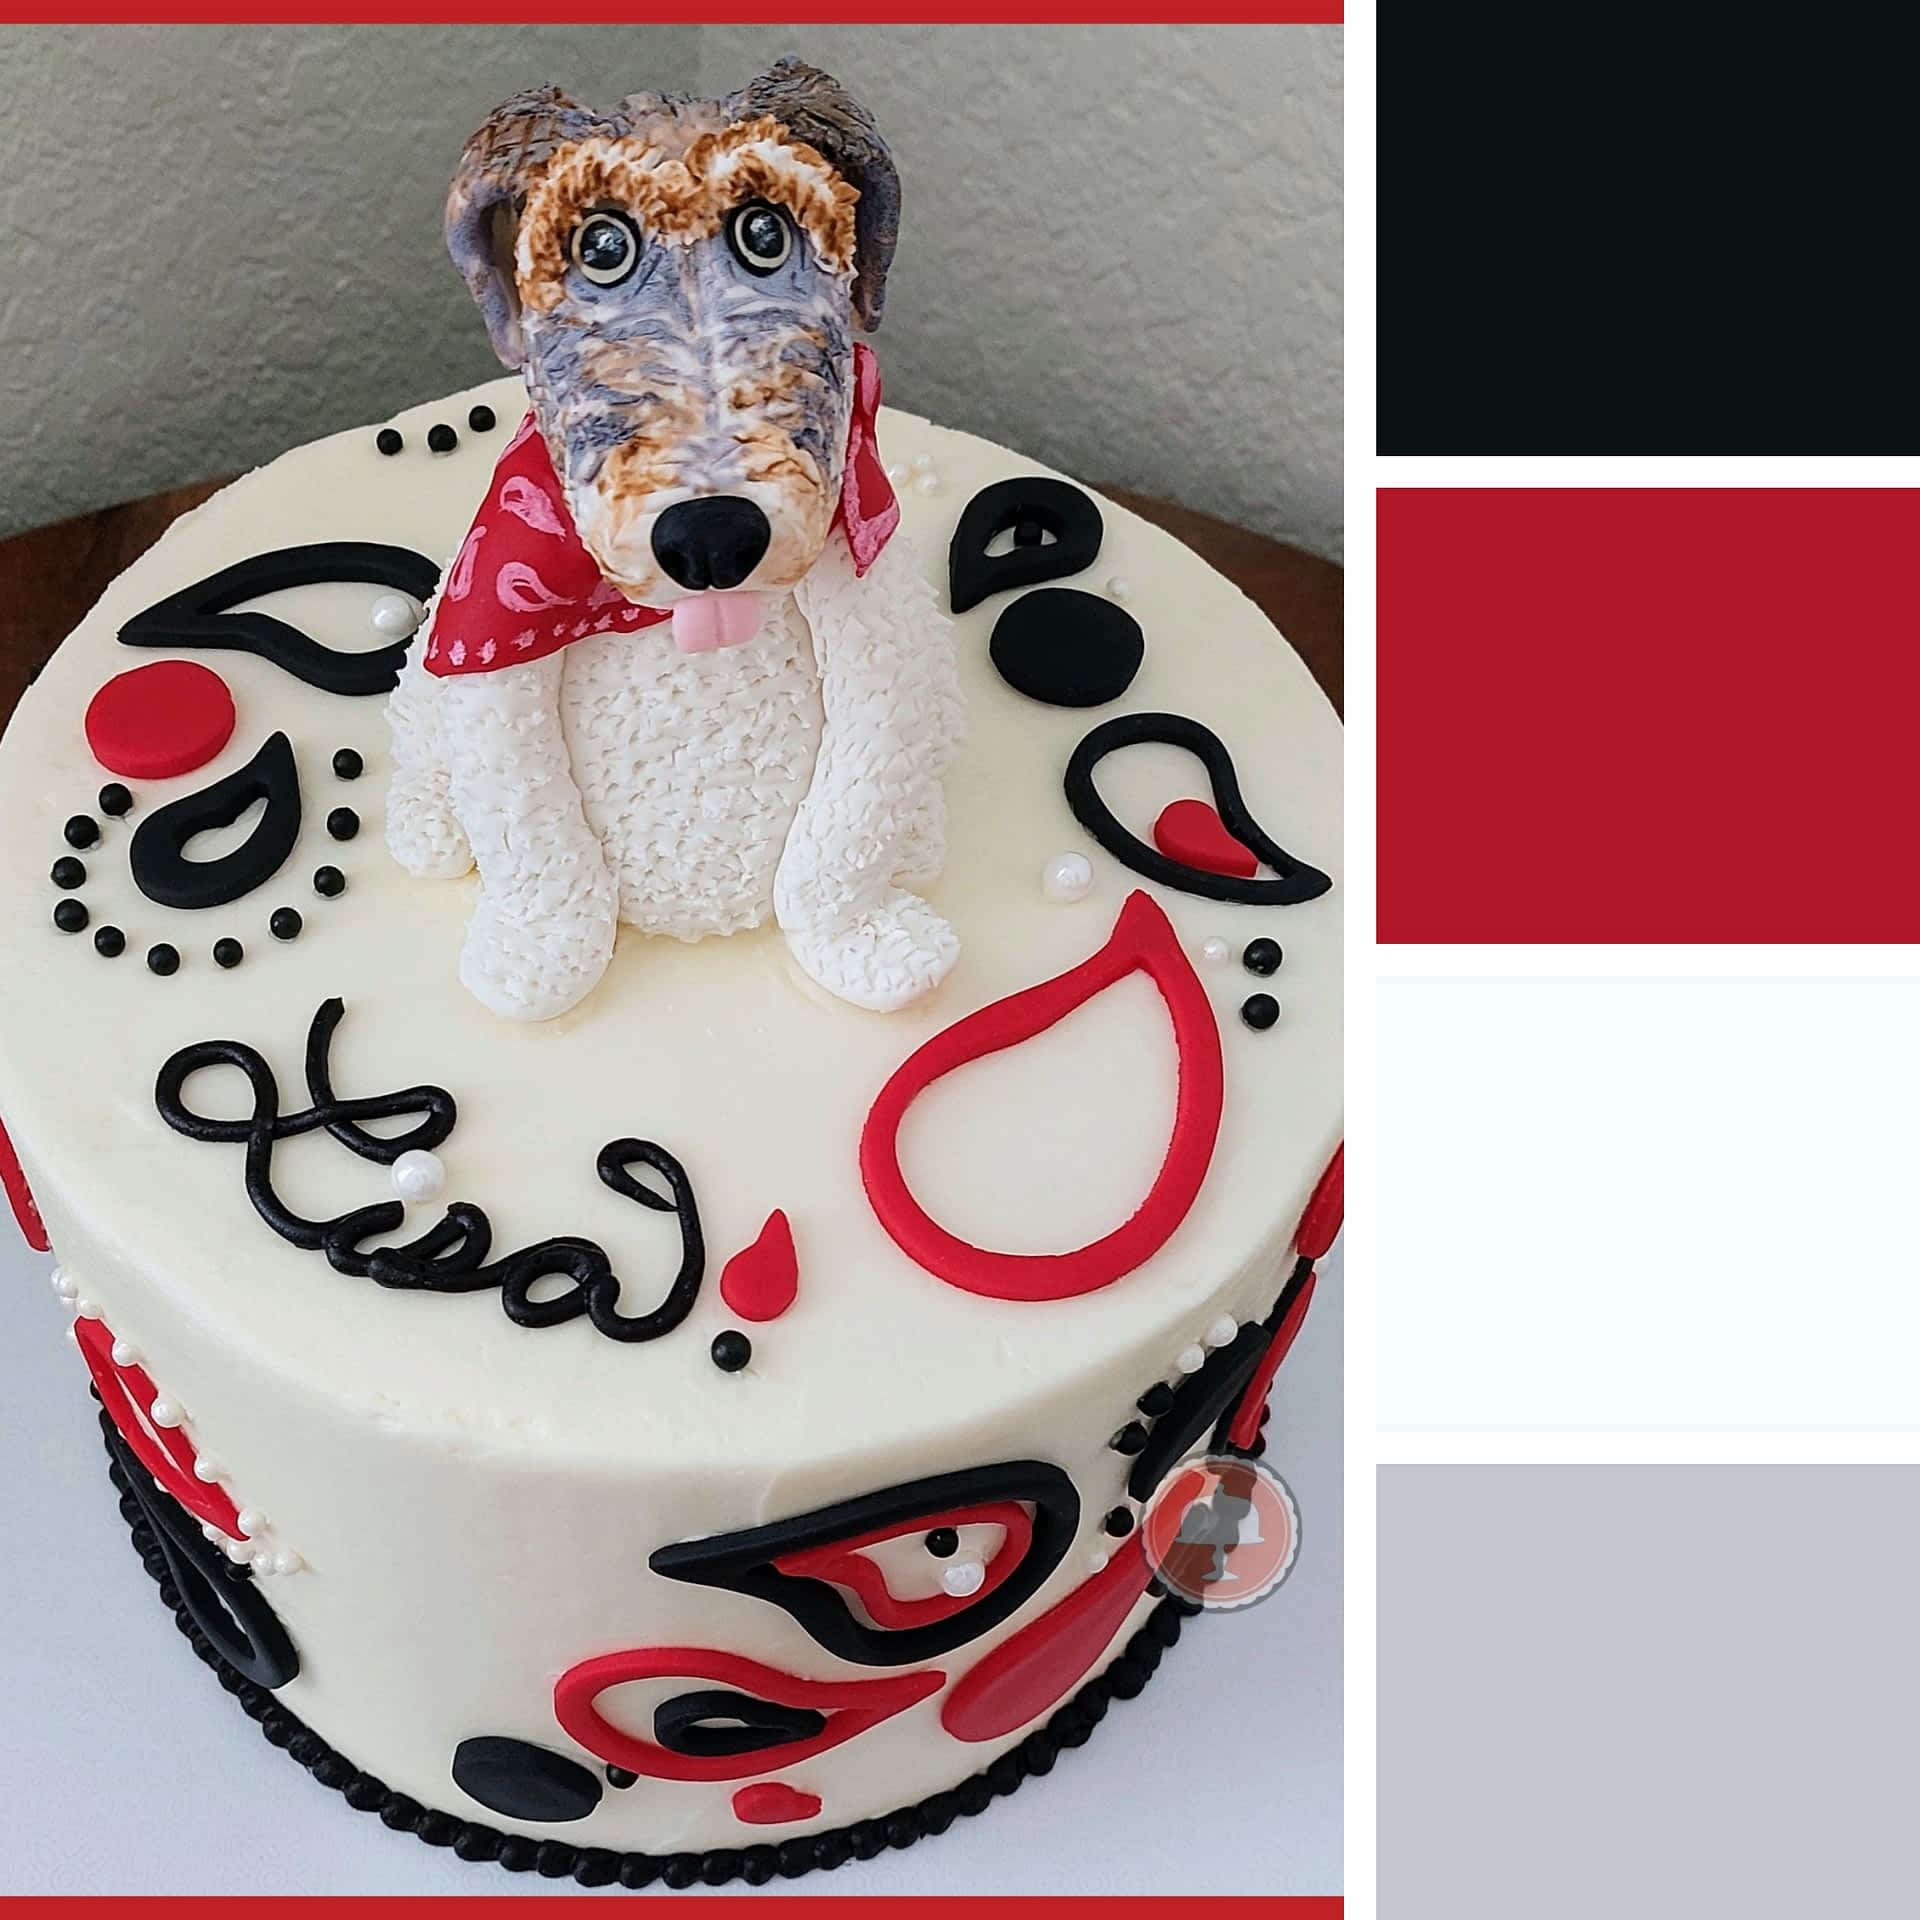 birthday cakes dog theme paisley pattern fondant dog cake topper raspberry cake filling 